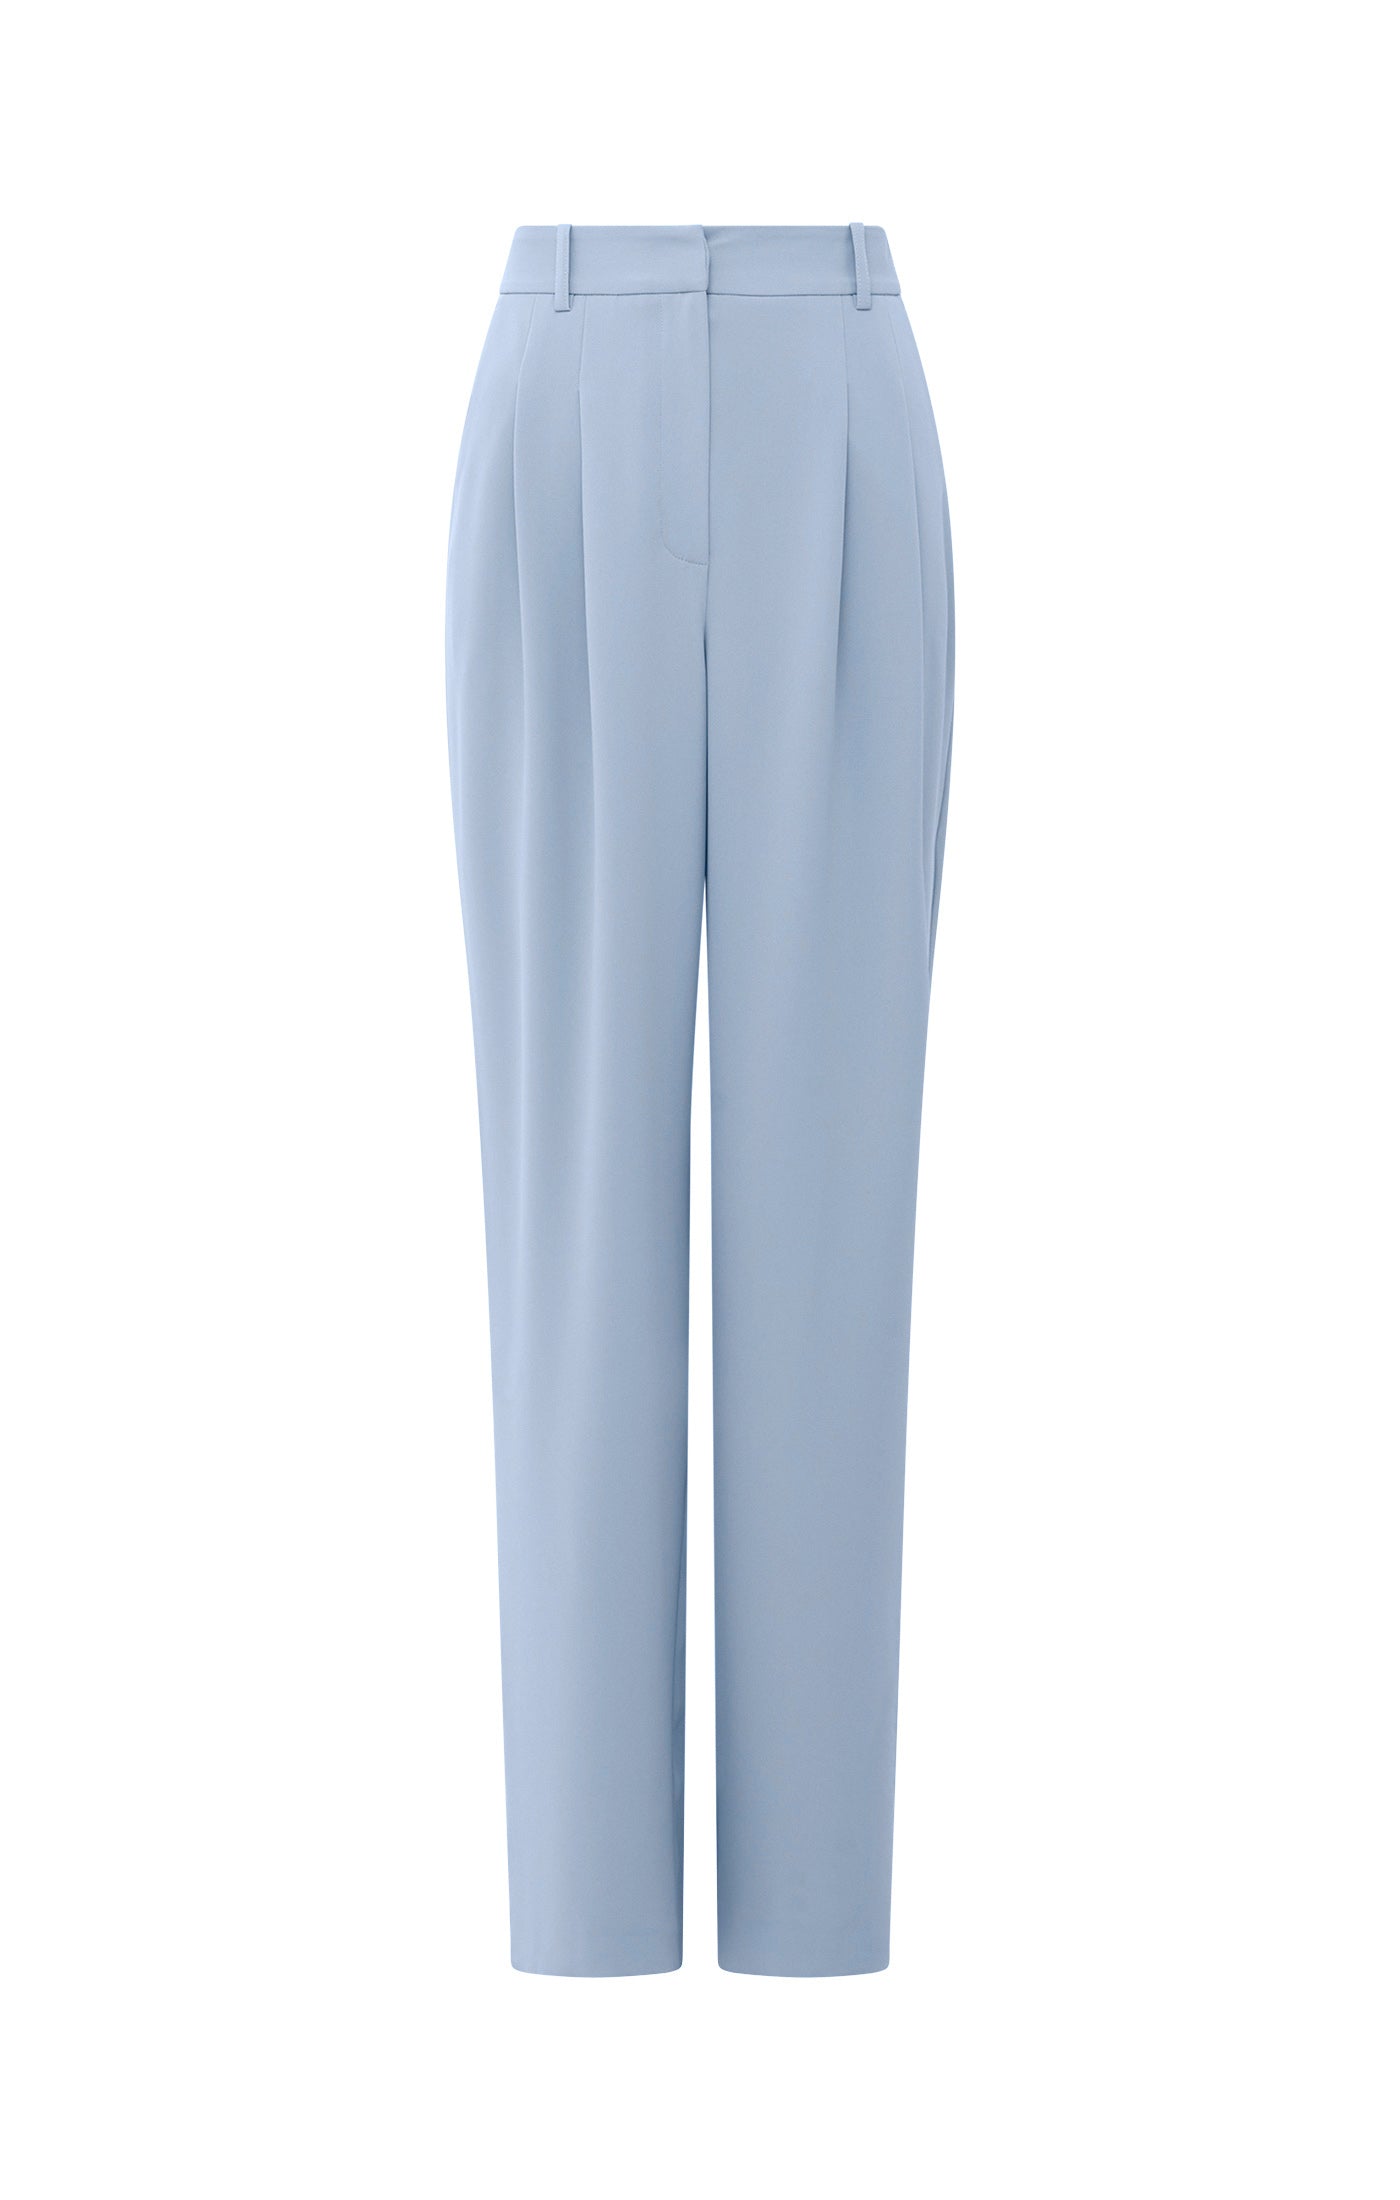 Cashmere blue wide leg pants | French Connection